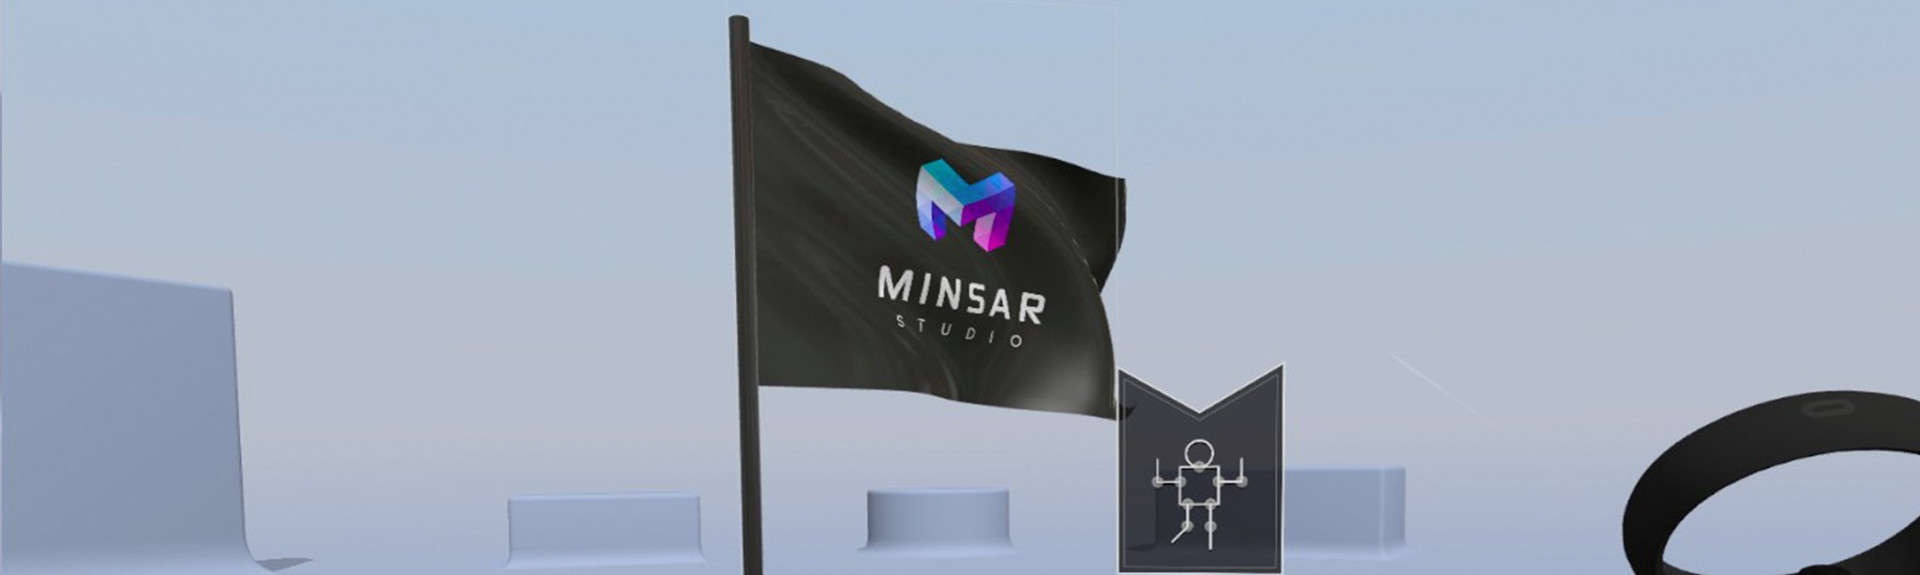 Minsar Studio